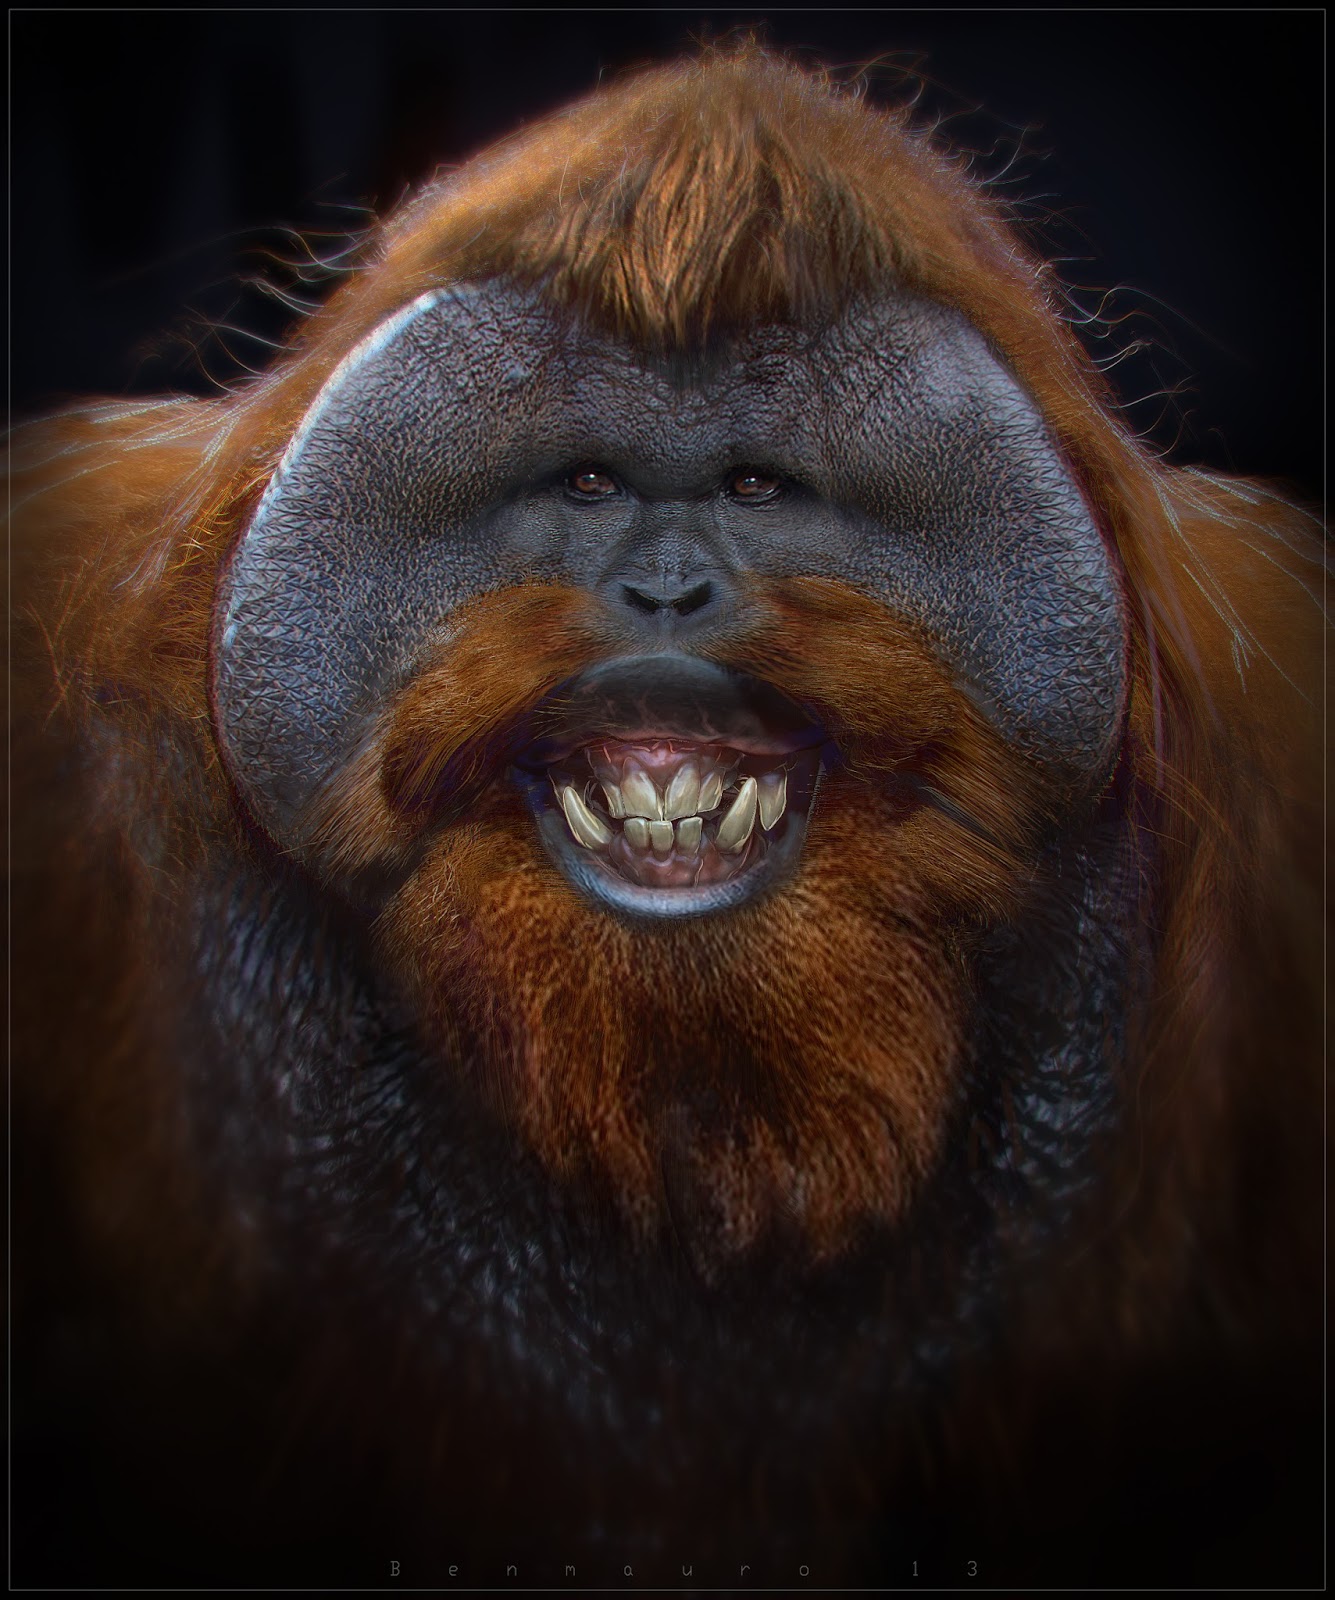 orangutan_by_benmauro-d6jhwss.jpg